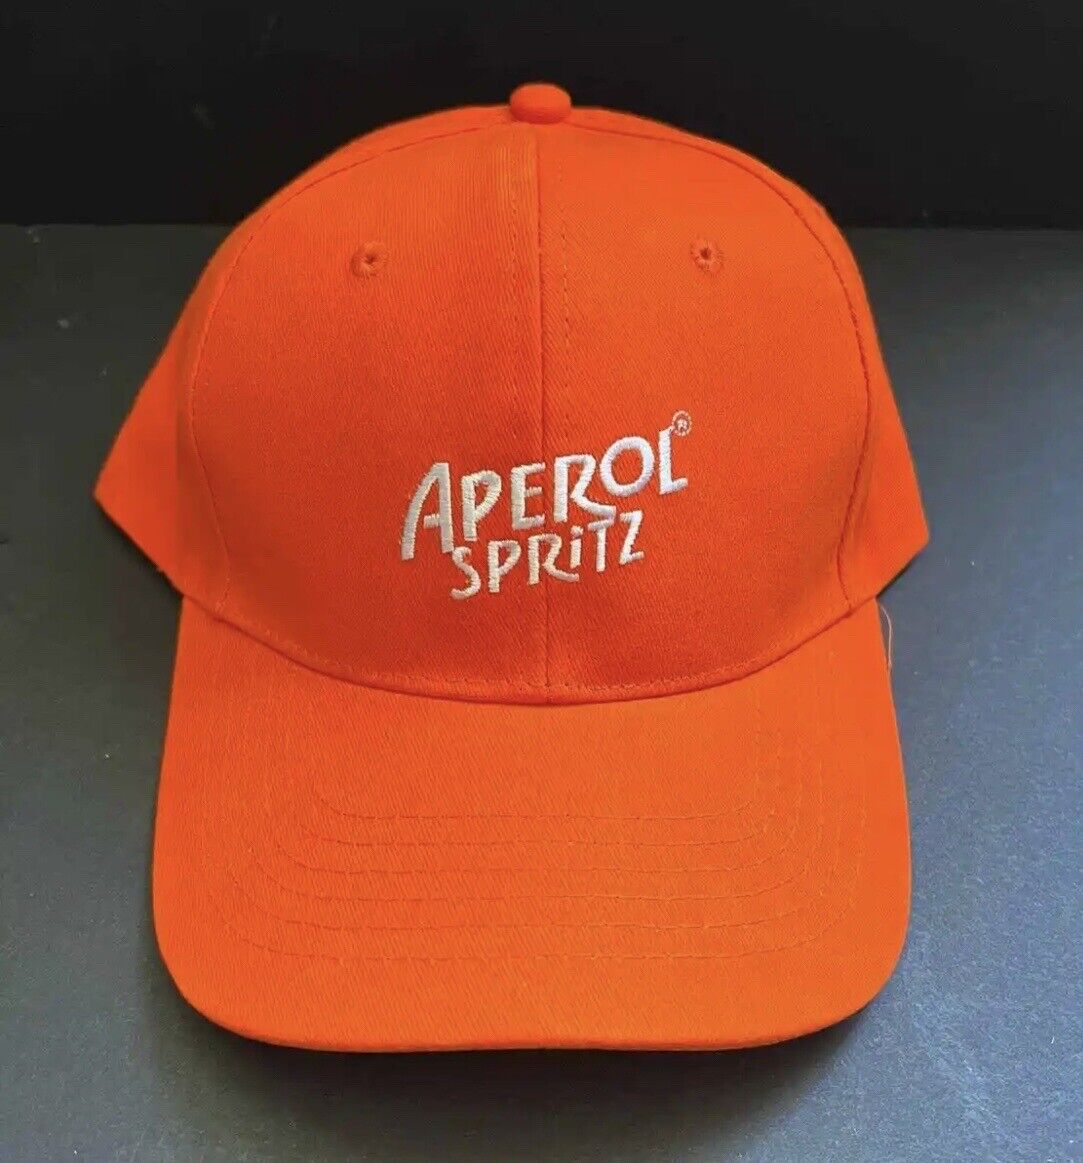 Aperol Spritz Brand New Orange Snapback Adjustable Baseball Hat Cap Lid